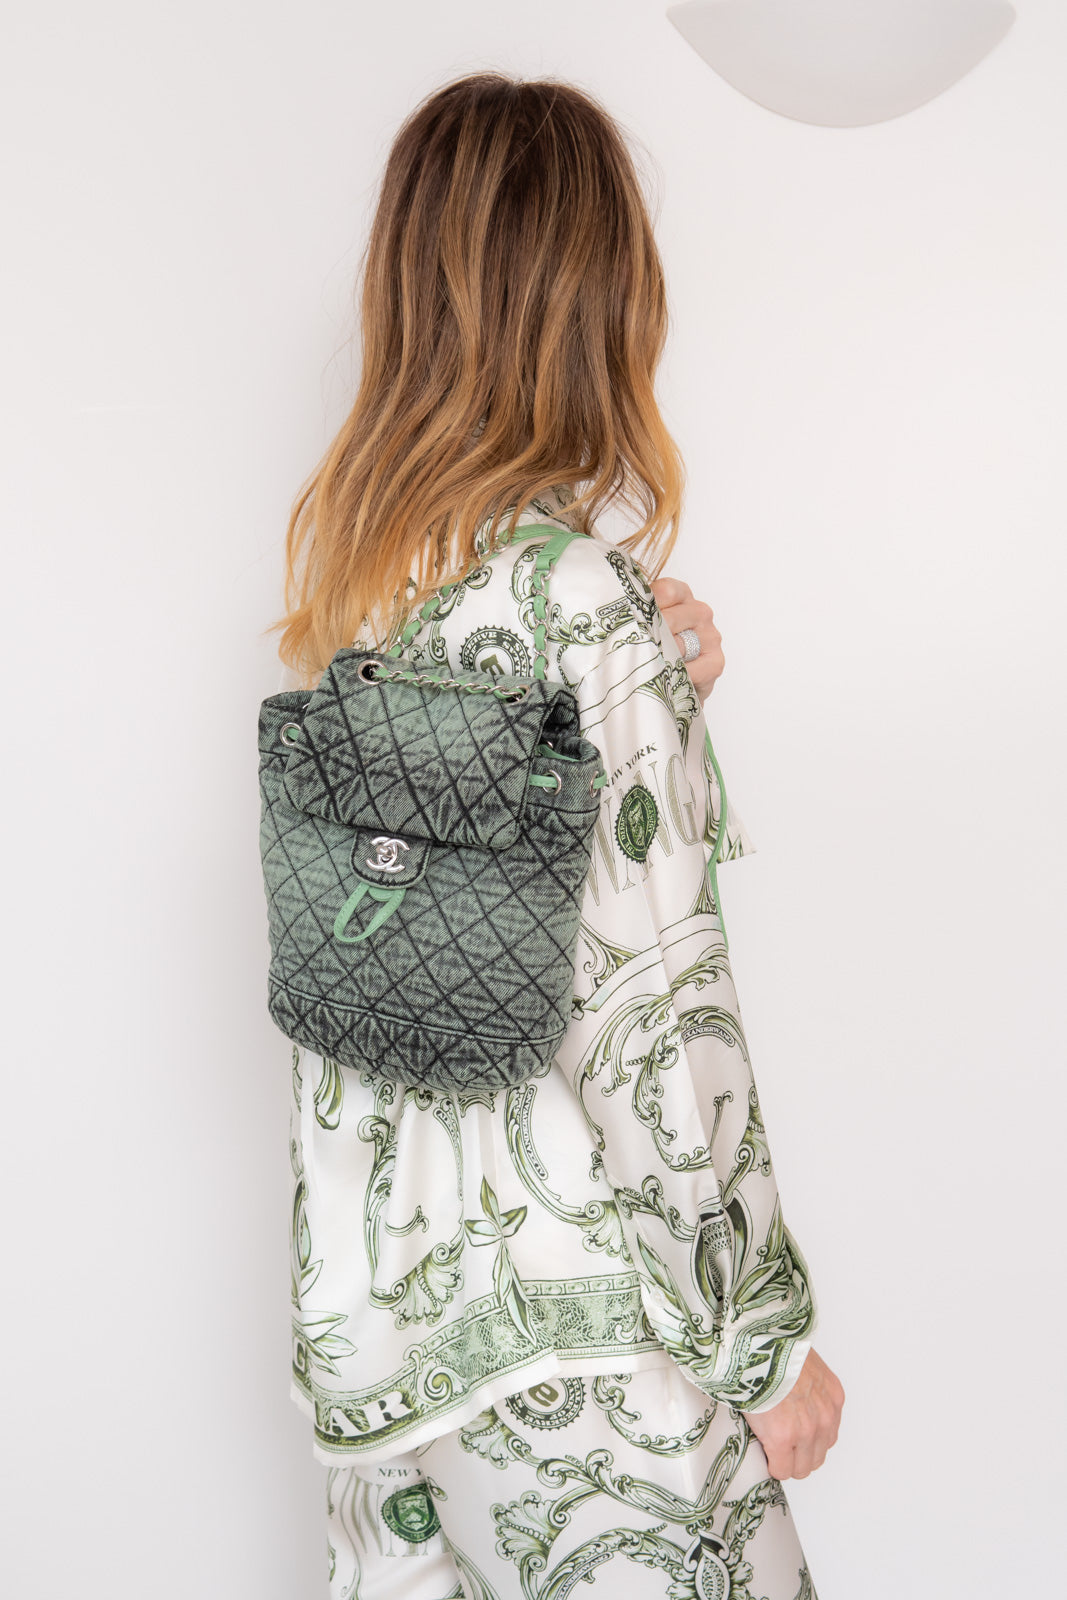 Chanel Green Denim Backpack - Image 6 of 11